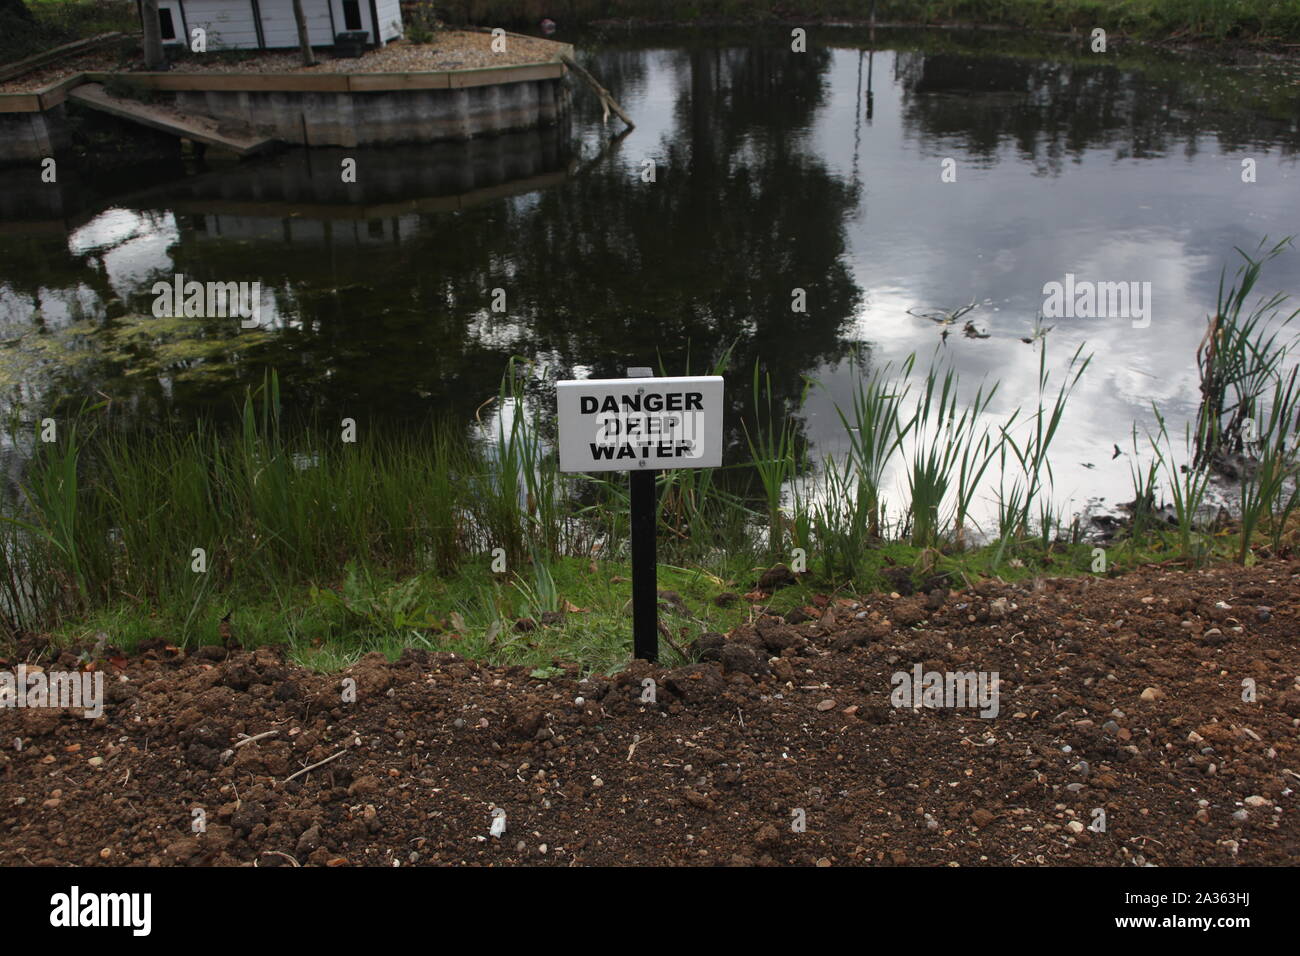 Danger Deep Water sign at a pond in Battlesbridge, Essex, Britain. Stock Photo